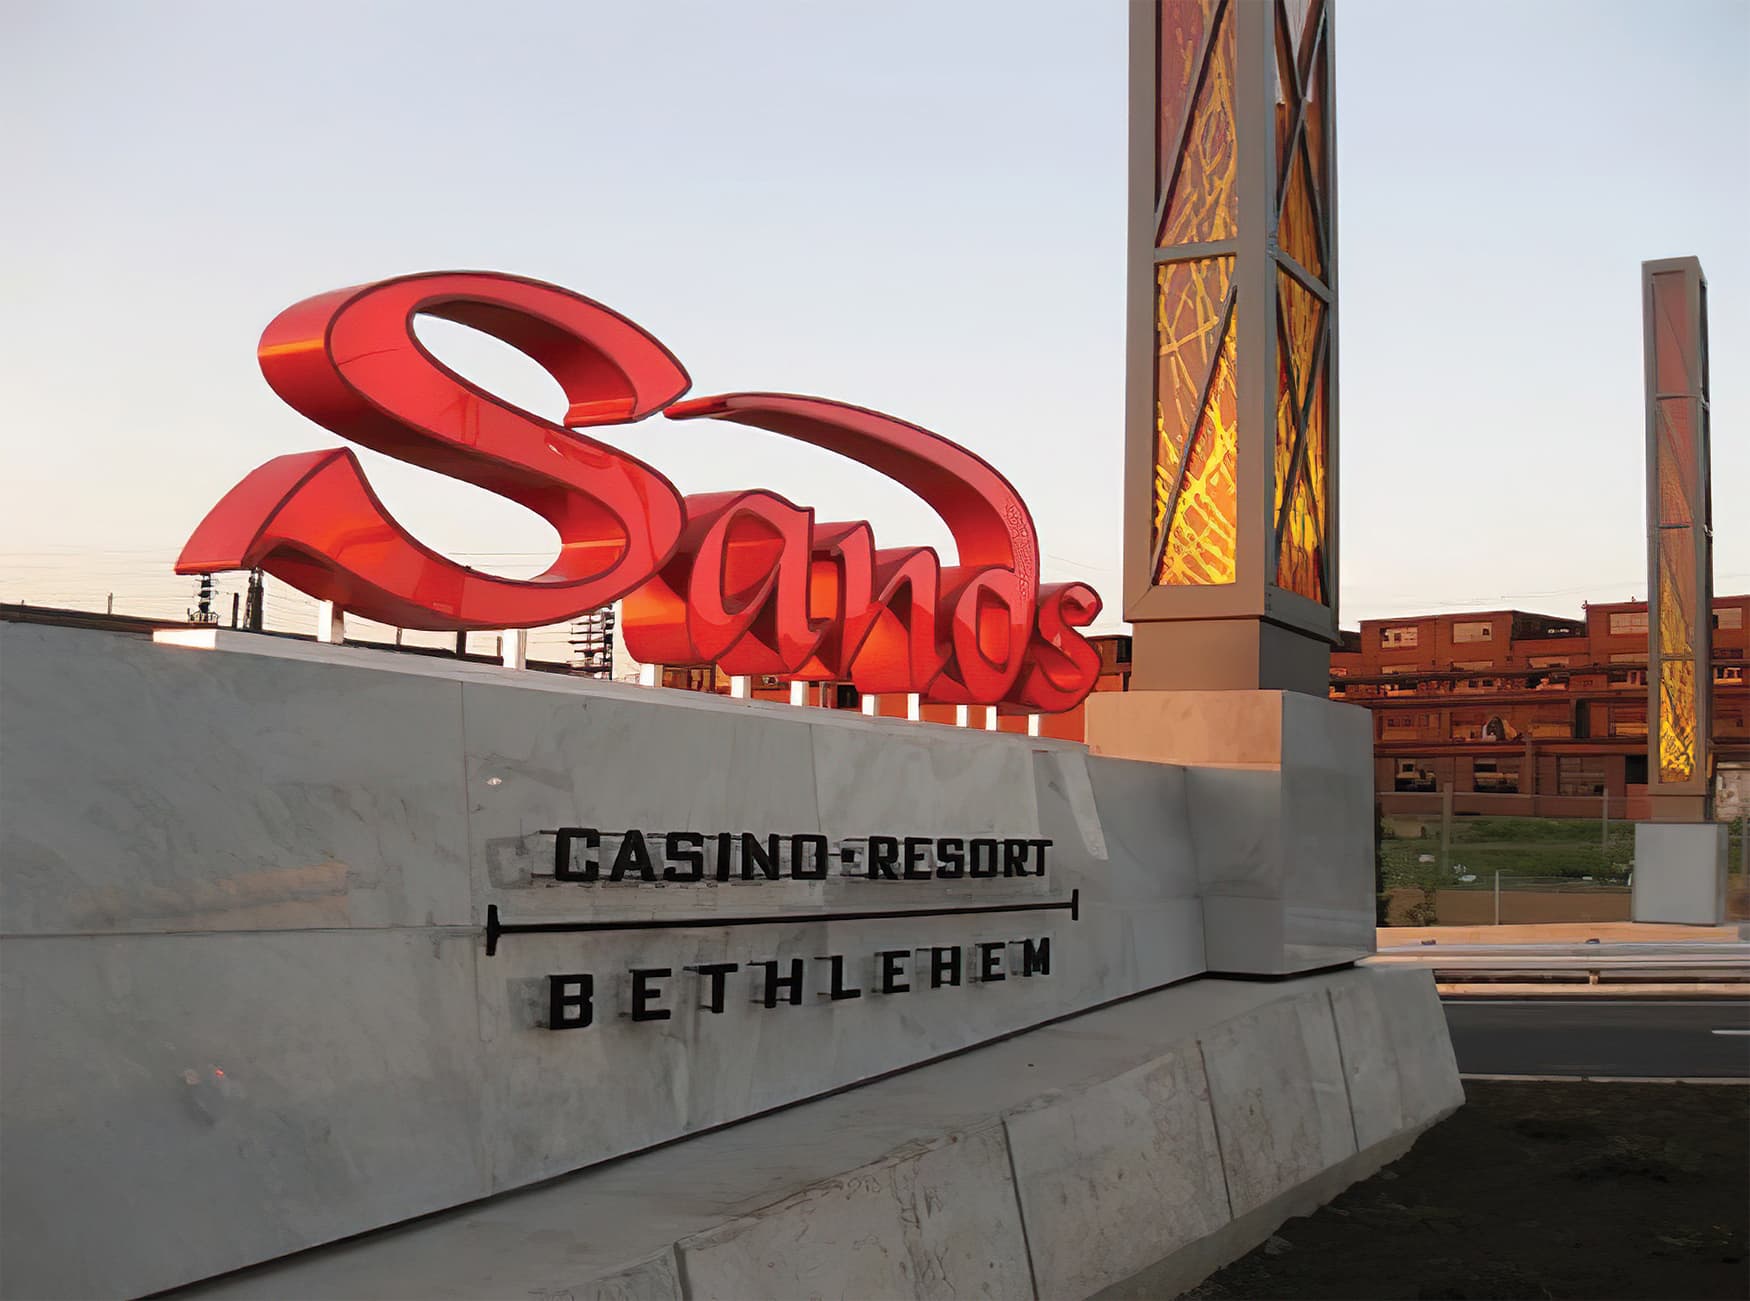 Sands Bethlehem Casino Resort. Environmental Graphics and Wayfinding System Design. Hospitality Design. Project Identity Monument Signage.